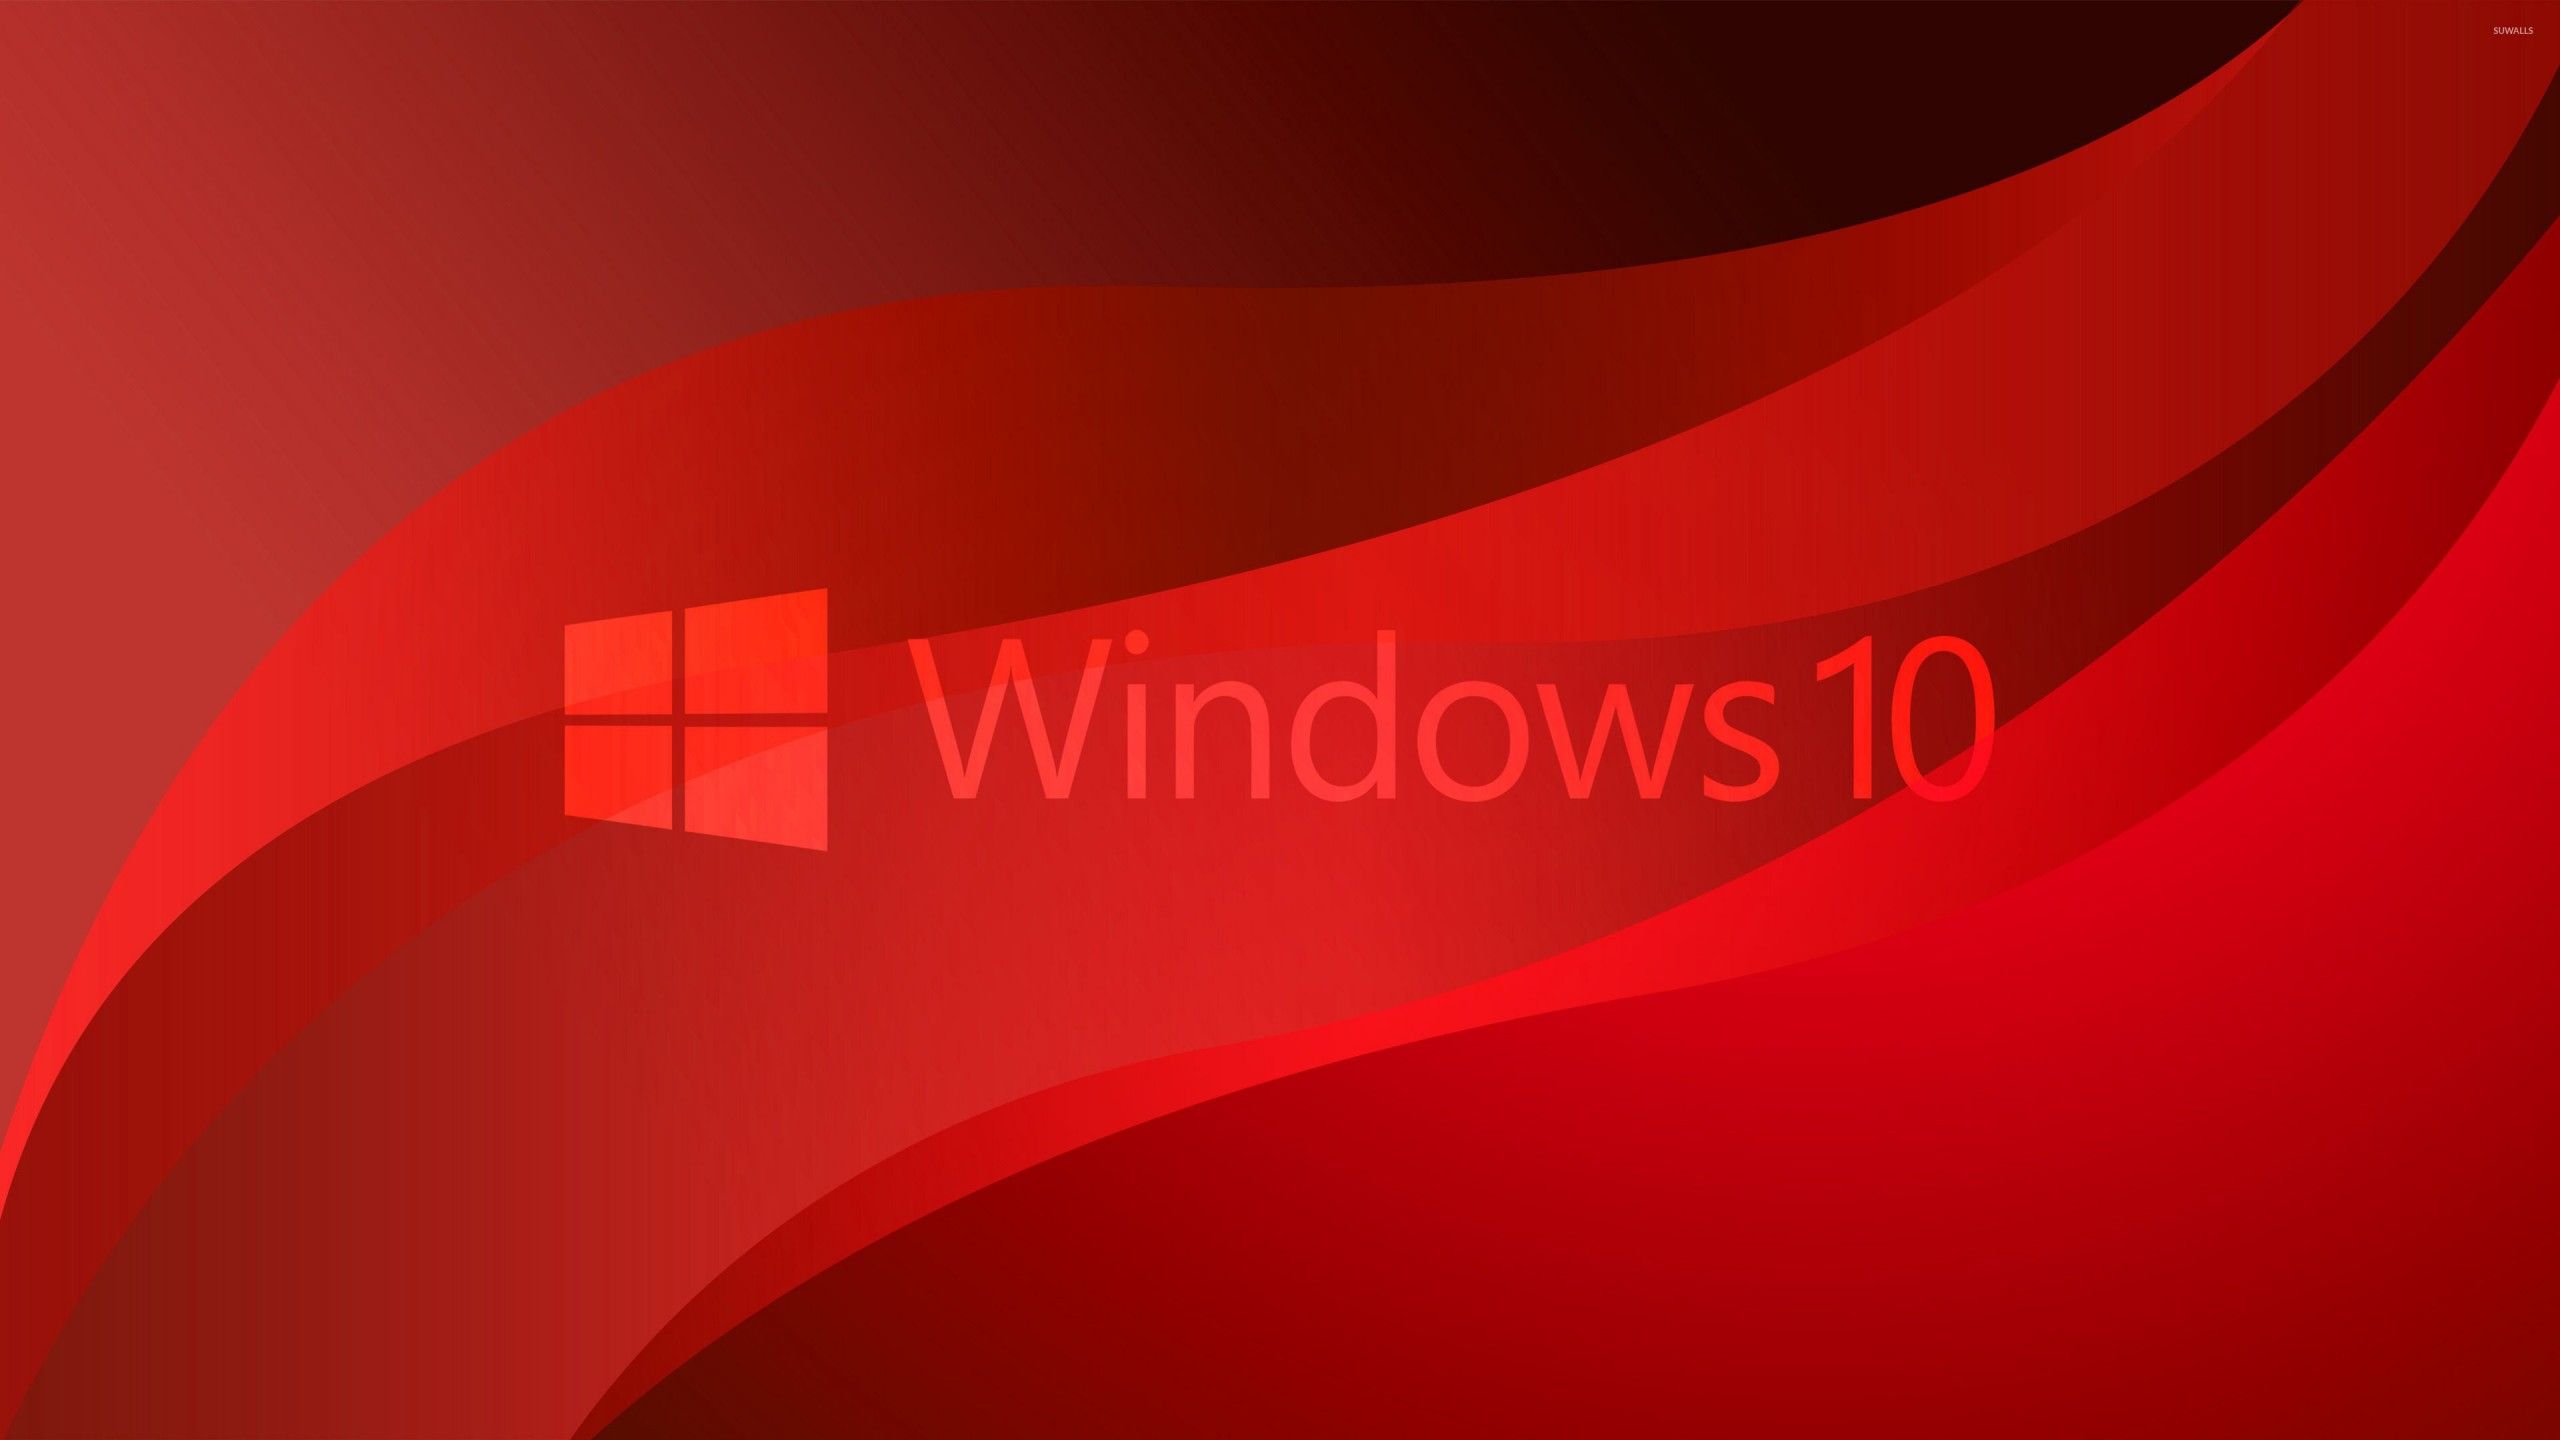  Windows 10 HD Hintergrundbild 2560x1440. Red Windows 10 4K HD Red Aesthetic Wallpaper